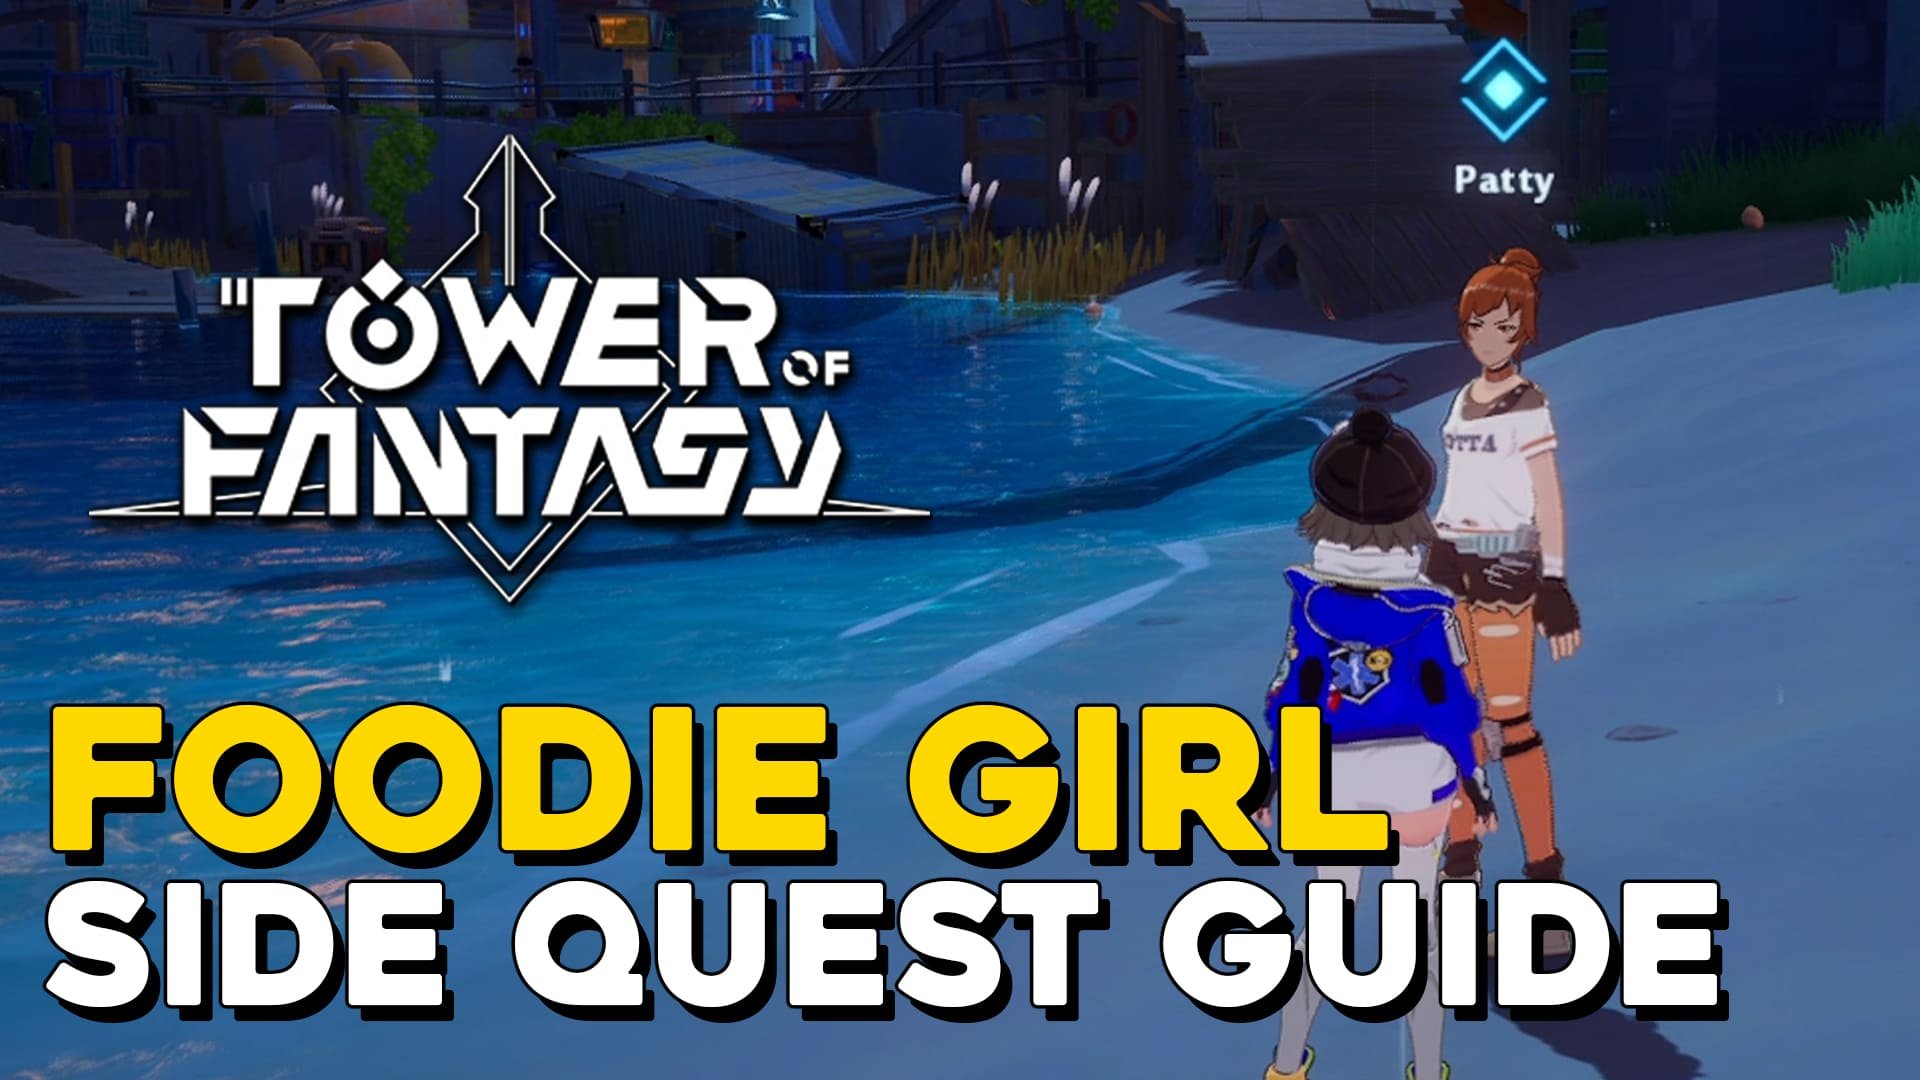 Tower Of Fantasy Foodie Girl Side Quest Guide.jpg